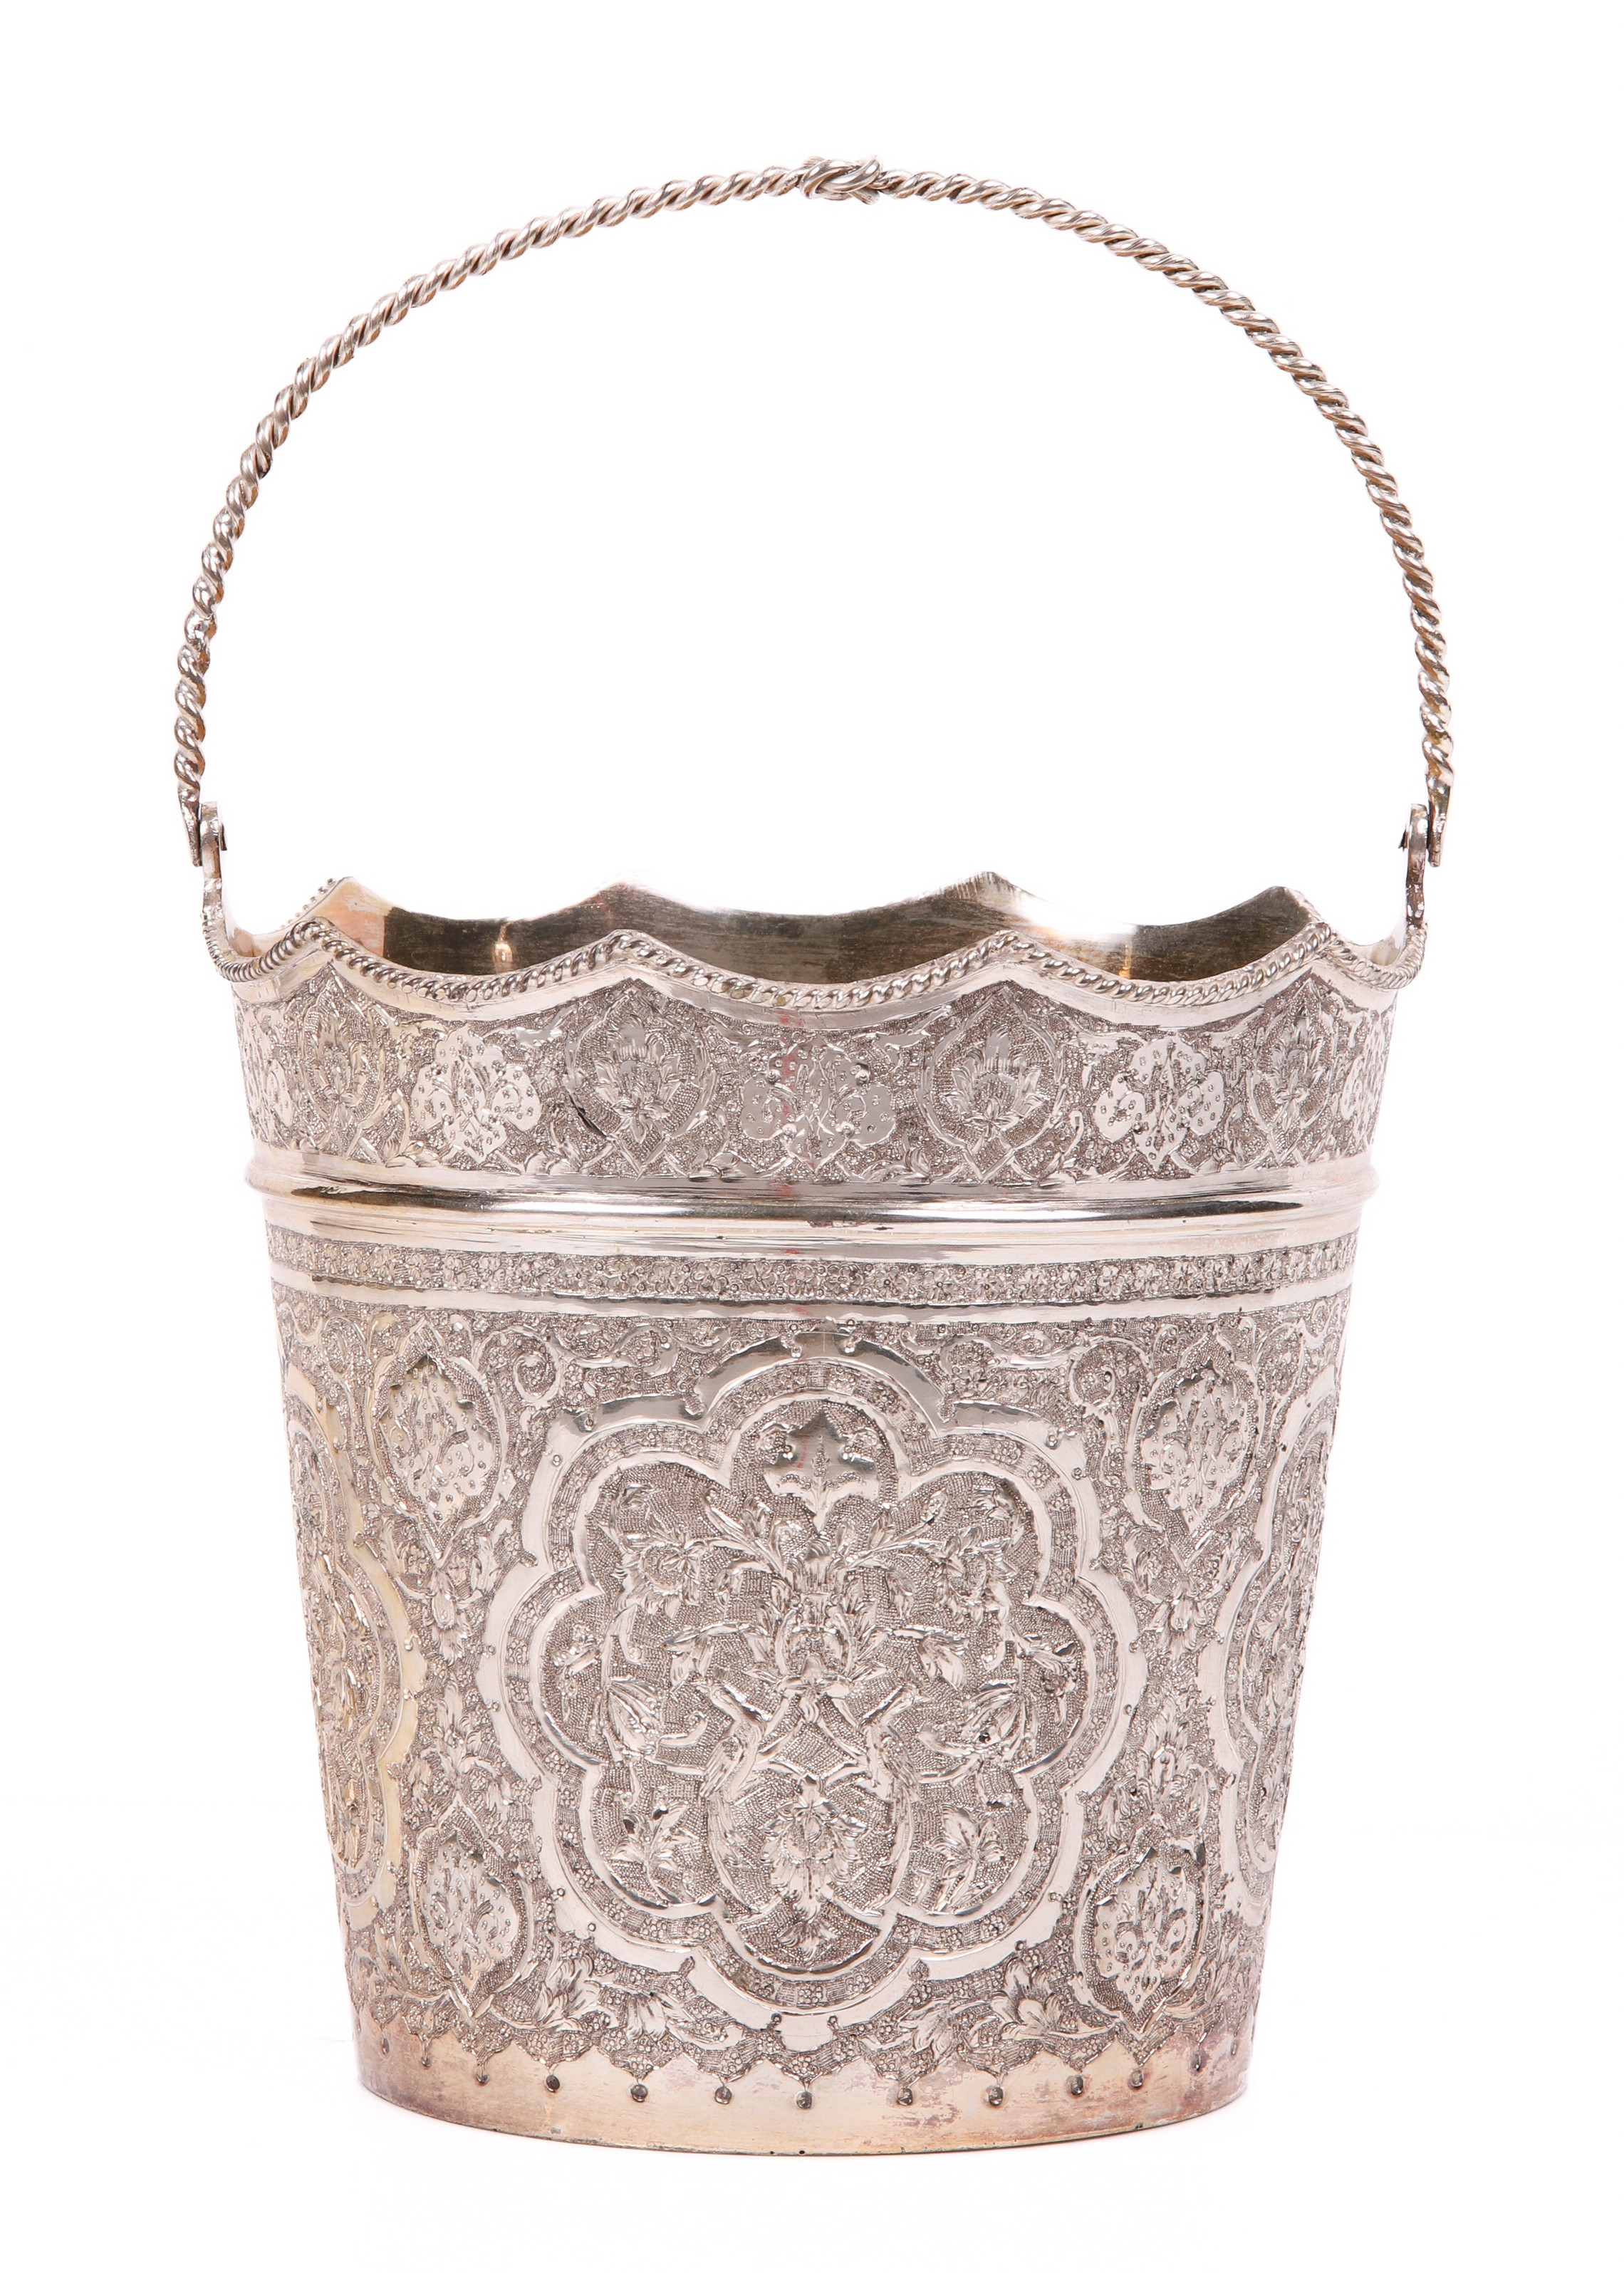 Persian silver swing handle basket,